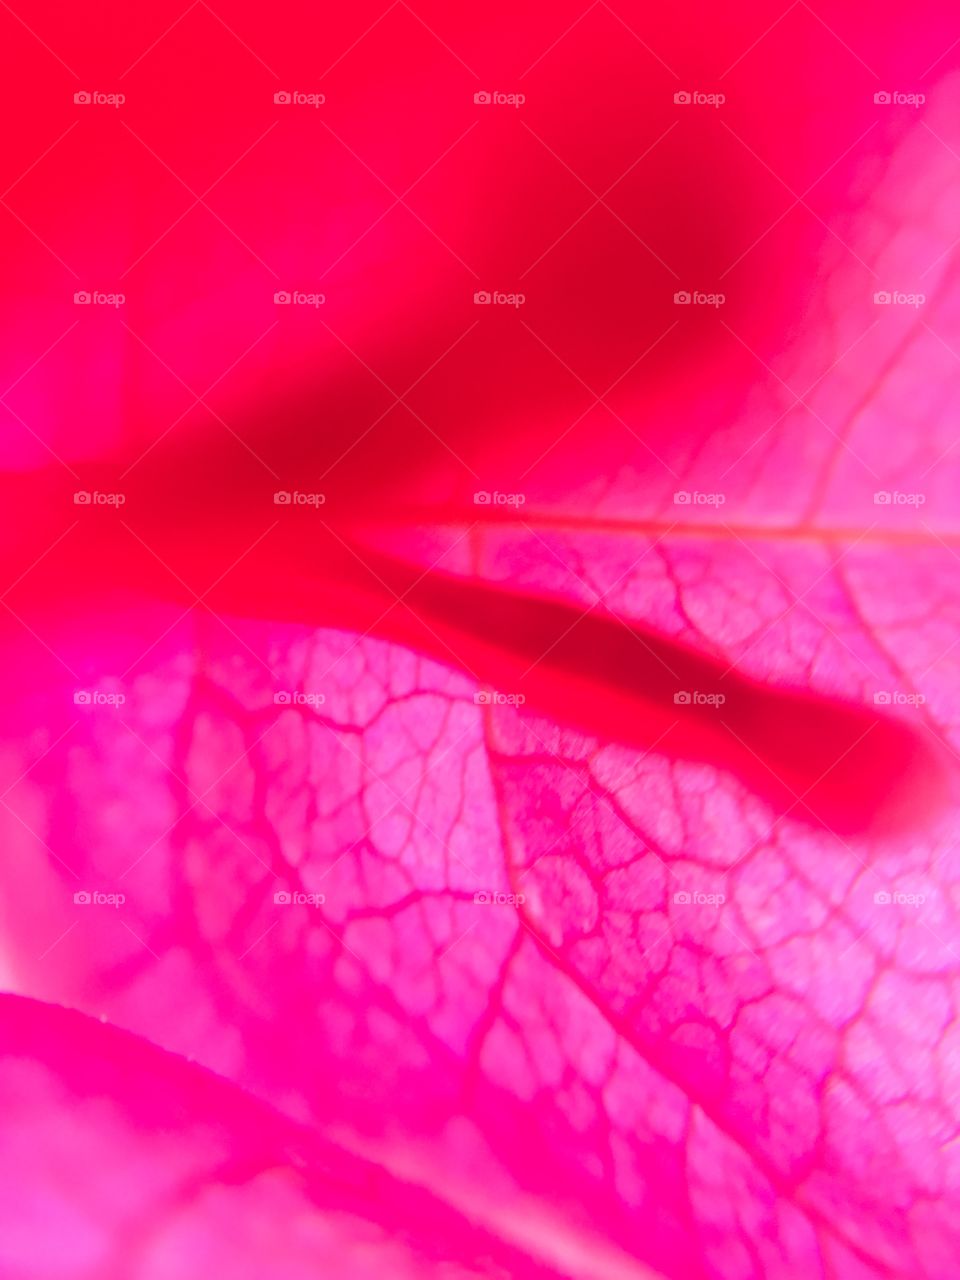 View through a pink leaf